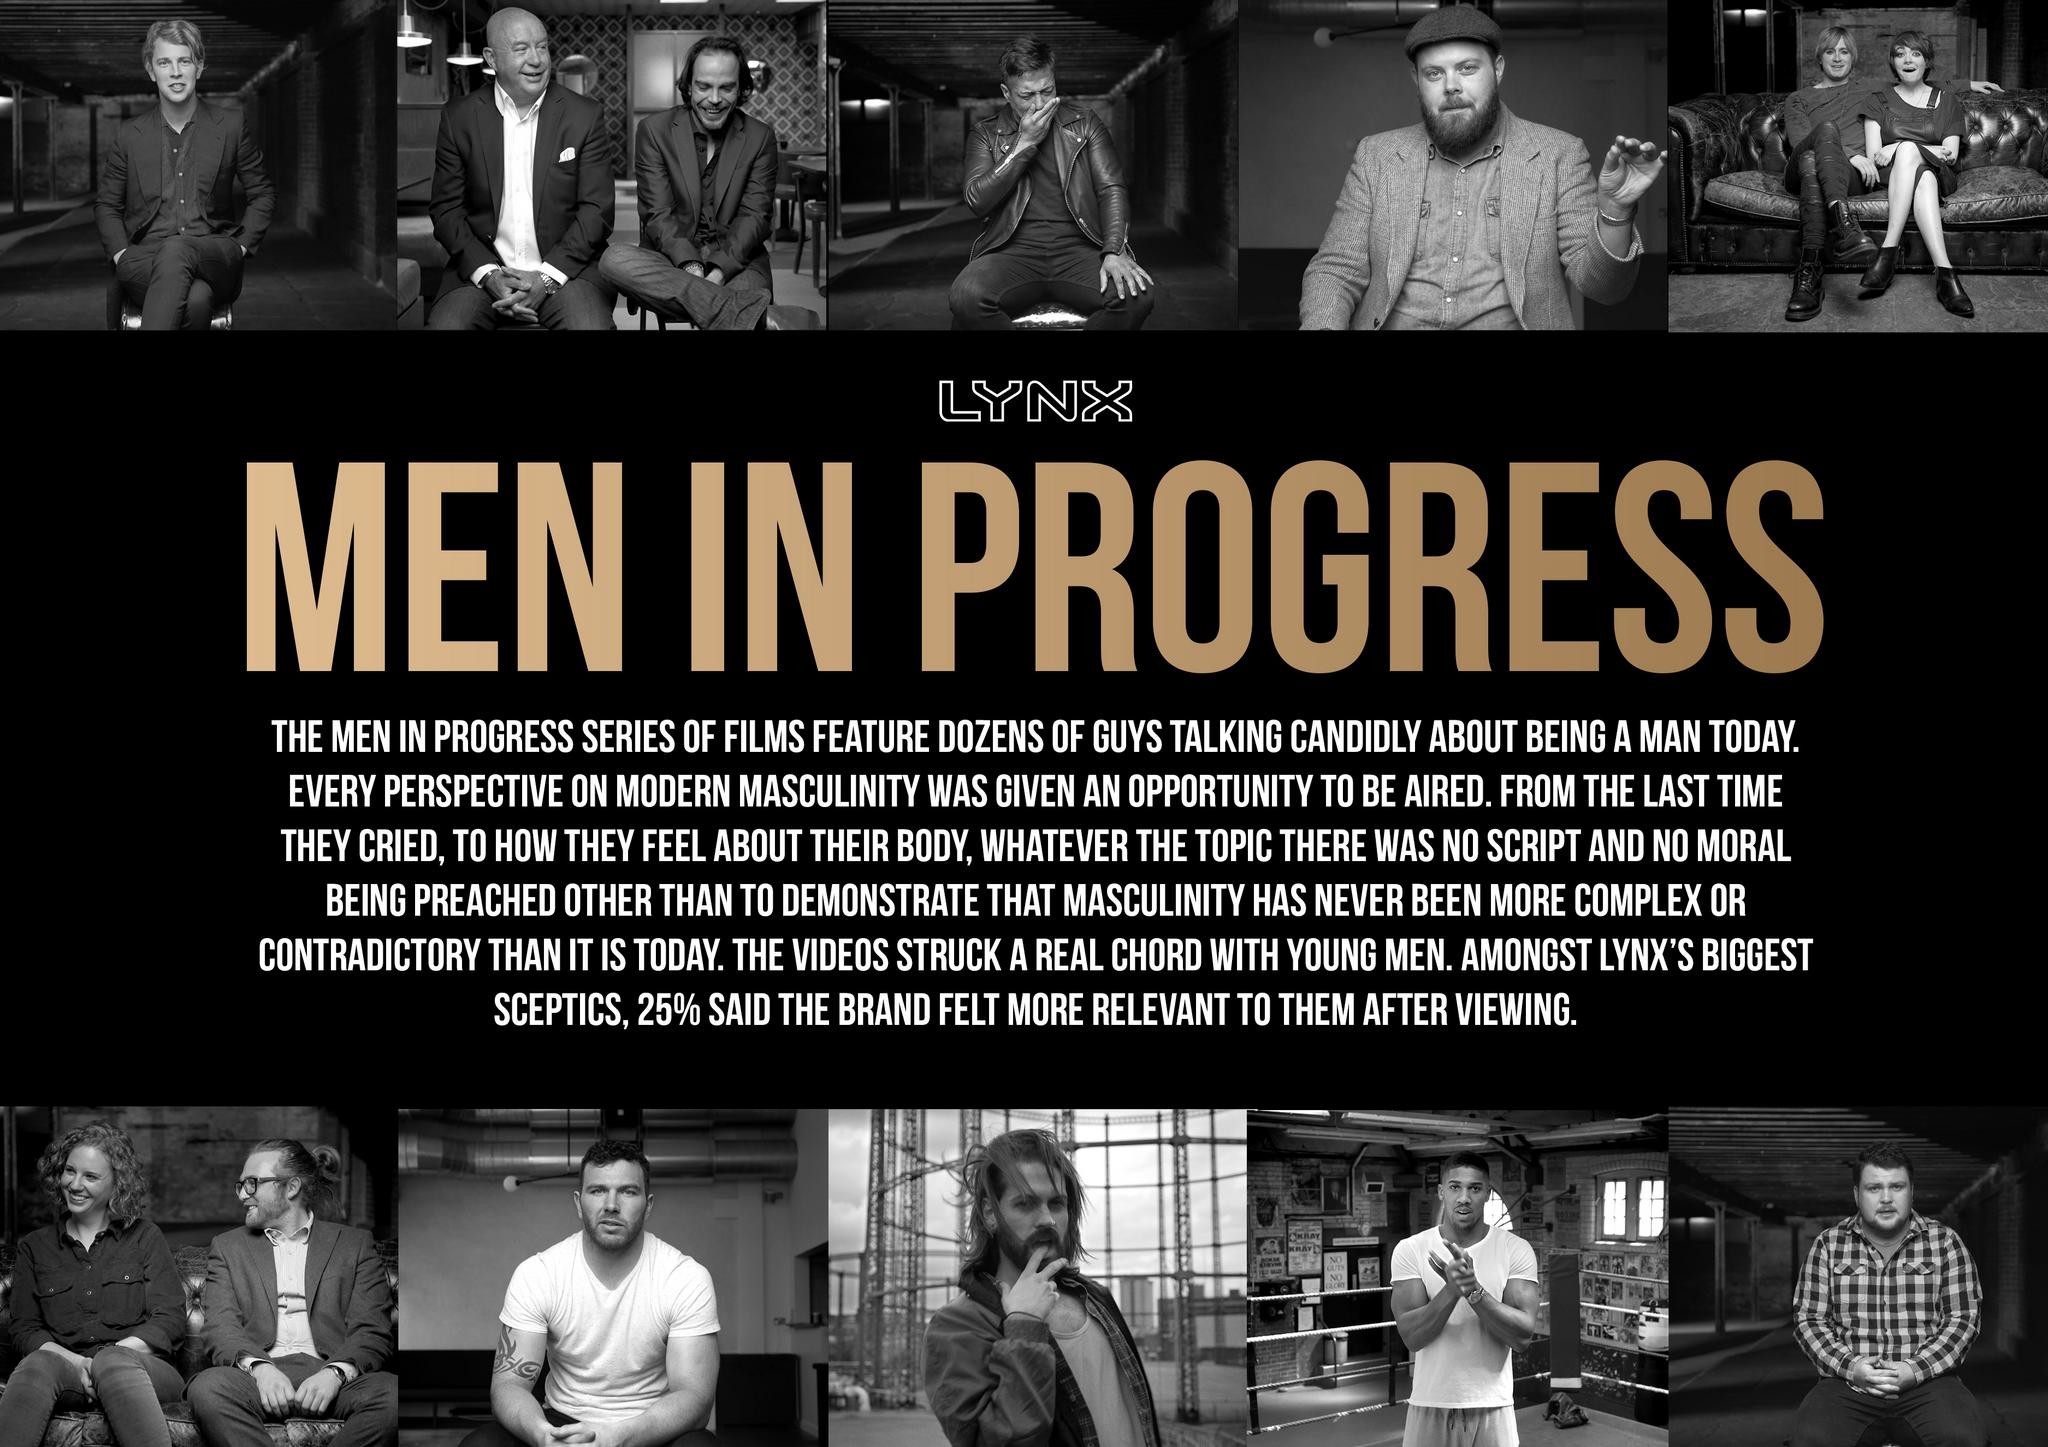 Men in Progress - Relationships